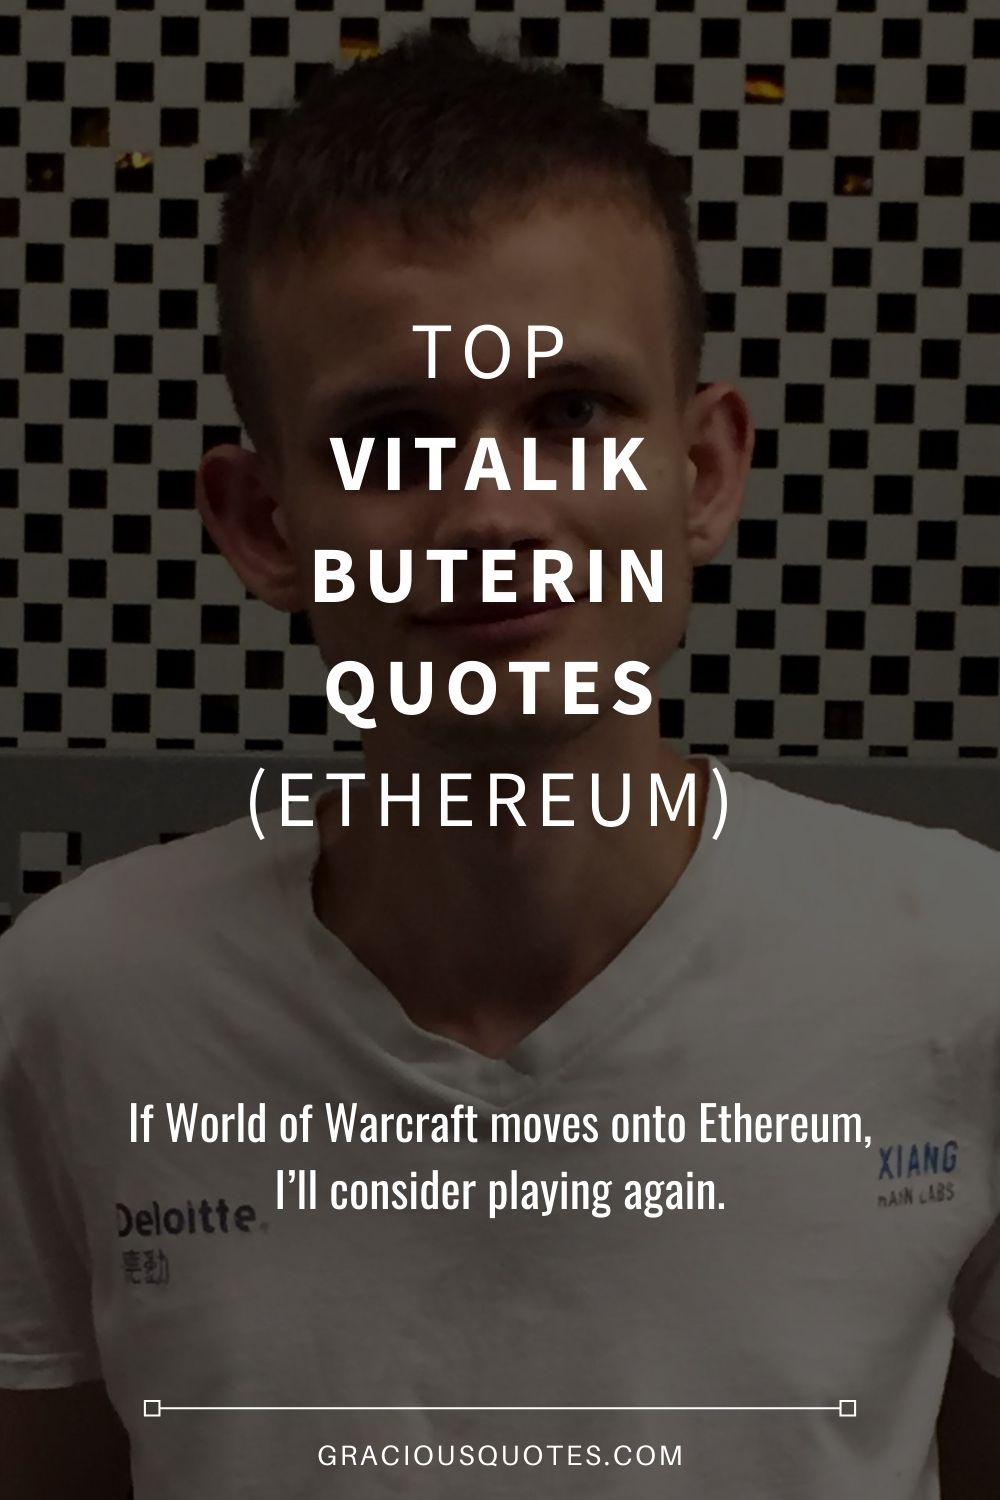 Top Vitalik Buterin Quotes (ETHEREUM) - Gracious Quotes